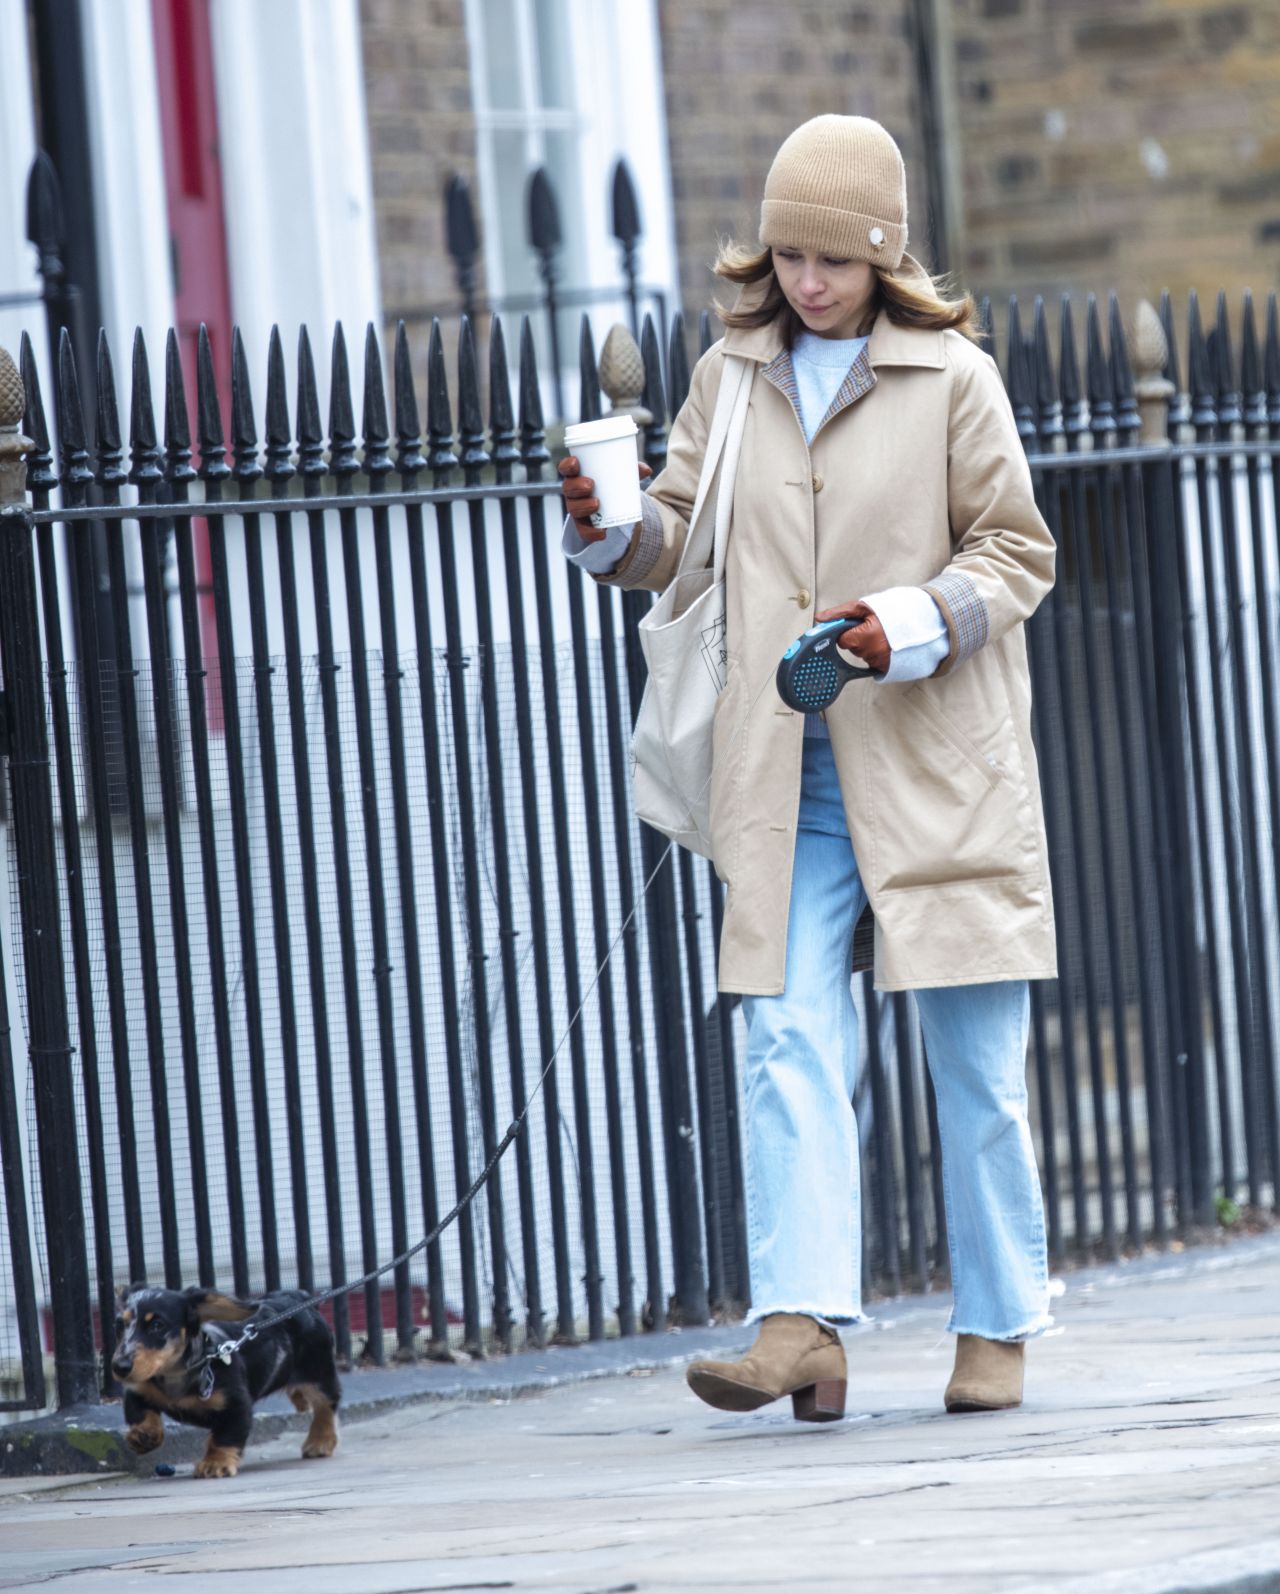 Emilia Clarke Wears Cute Summer Outfit While Walking Her Dog in London:  Photo 4595220, Emilia Clarke Photos